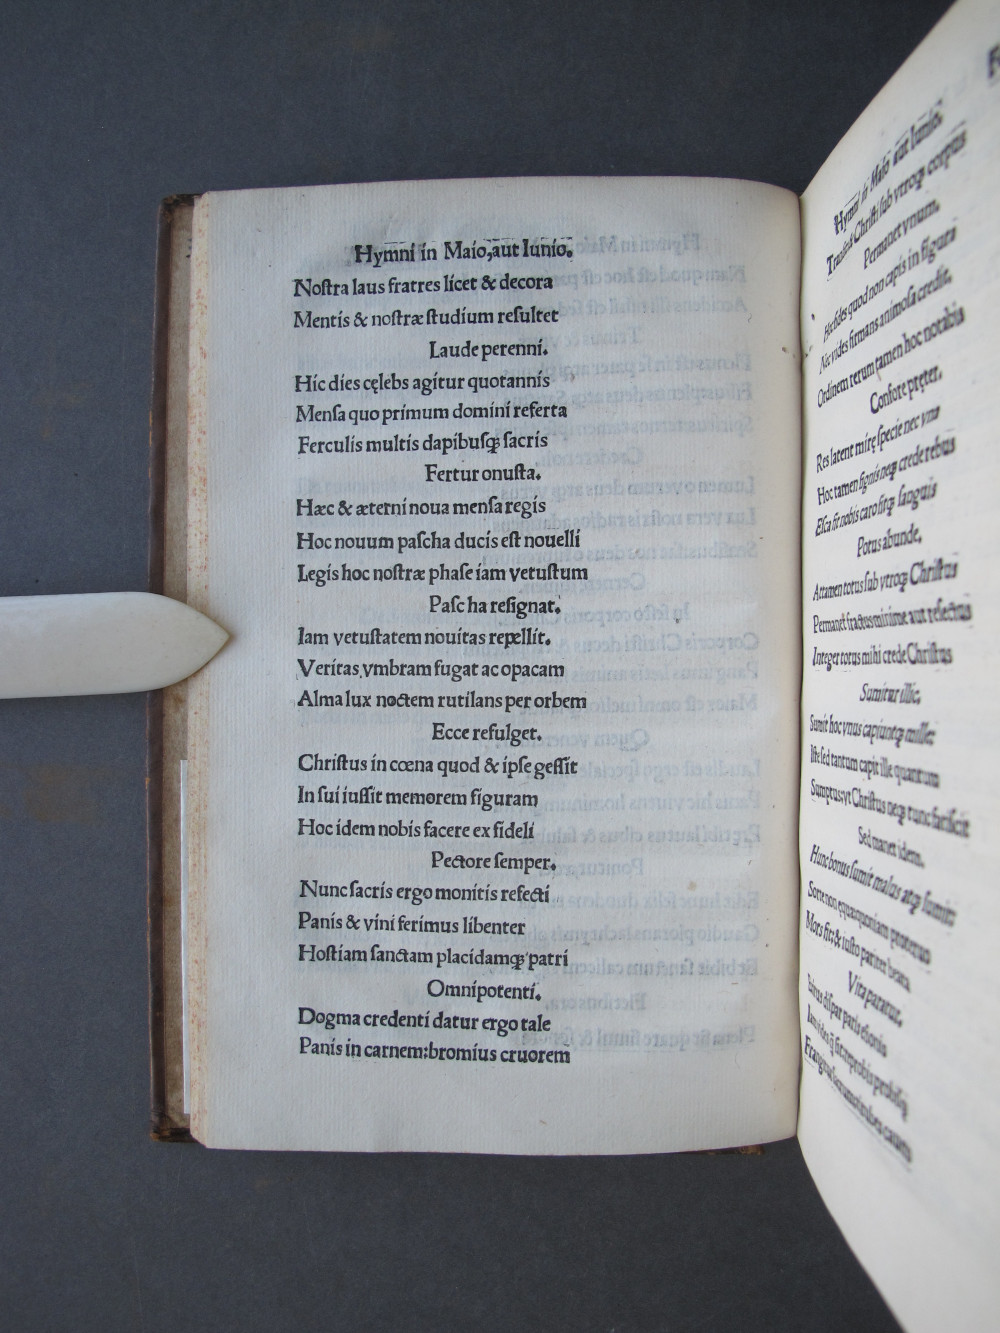 Folio 22 verso